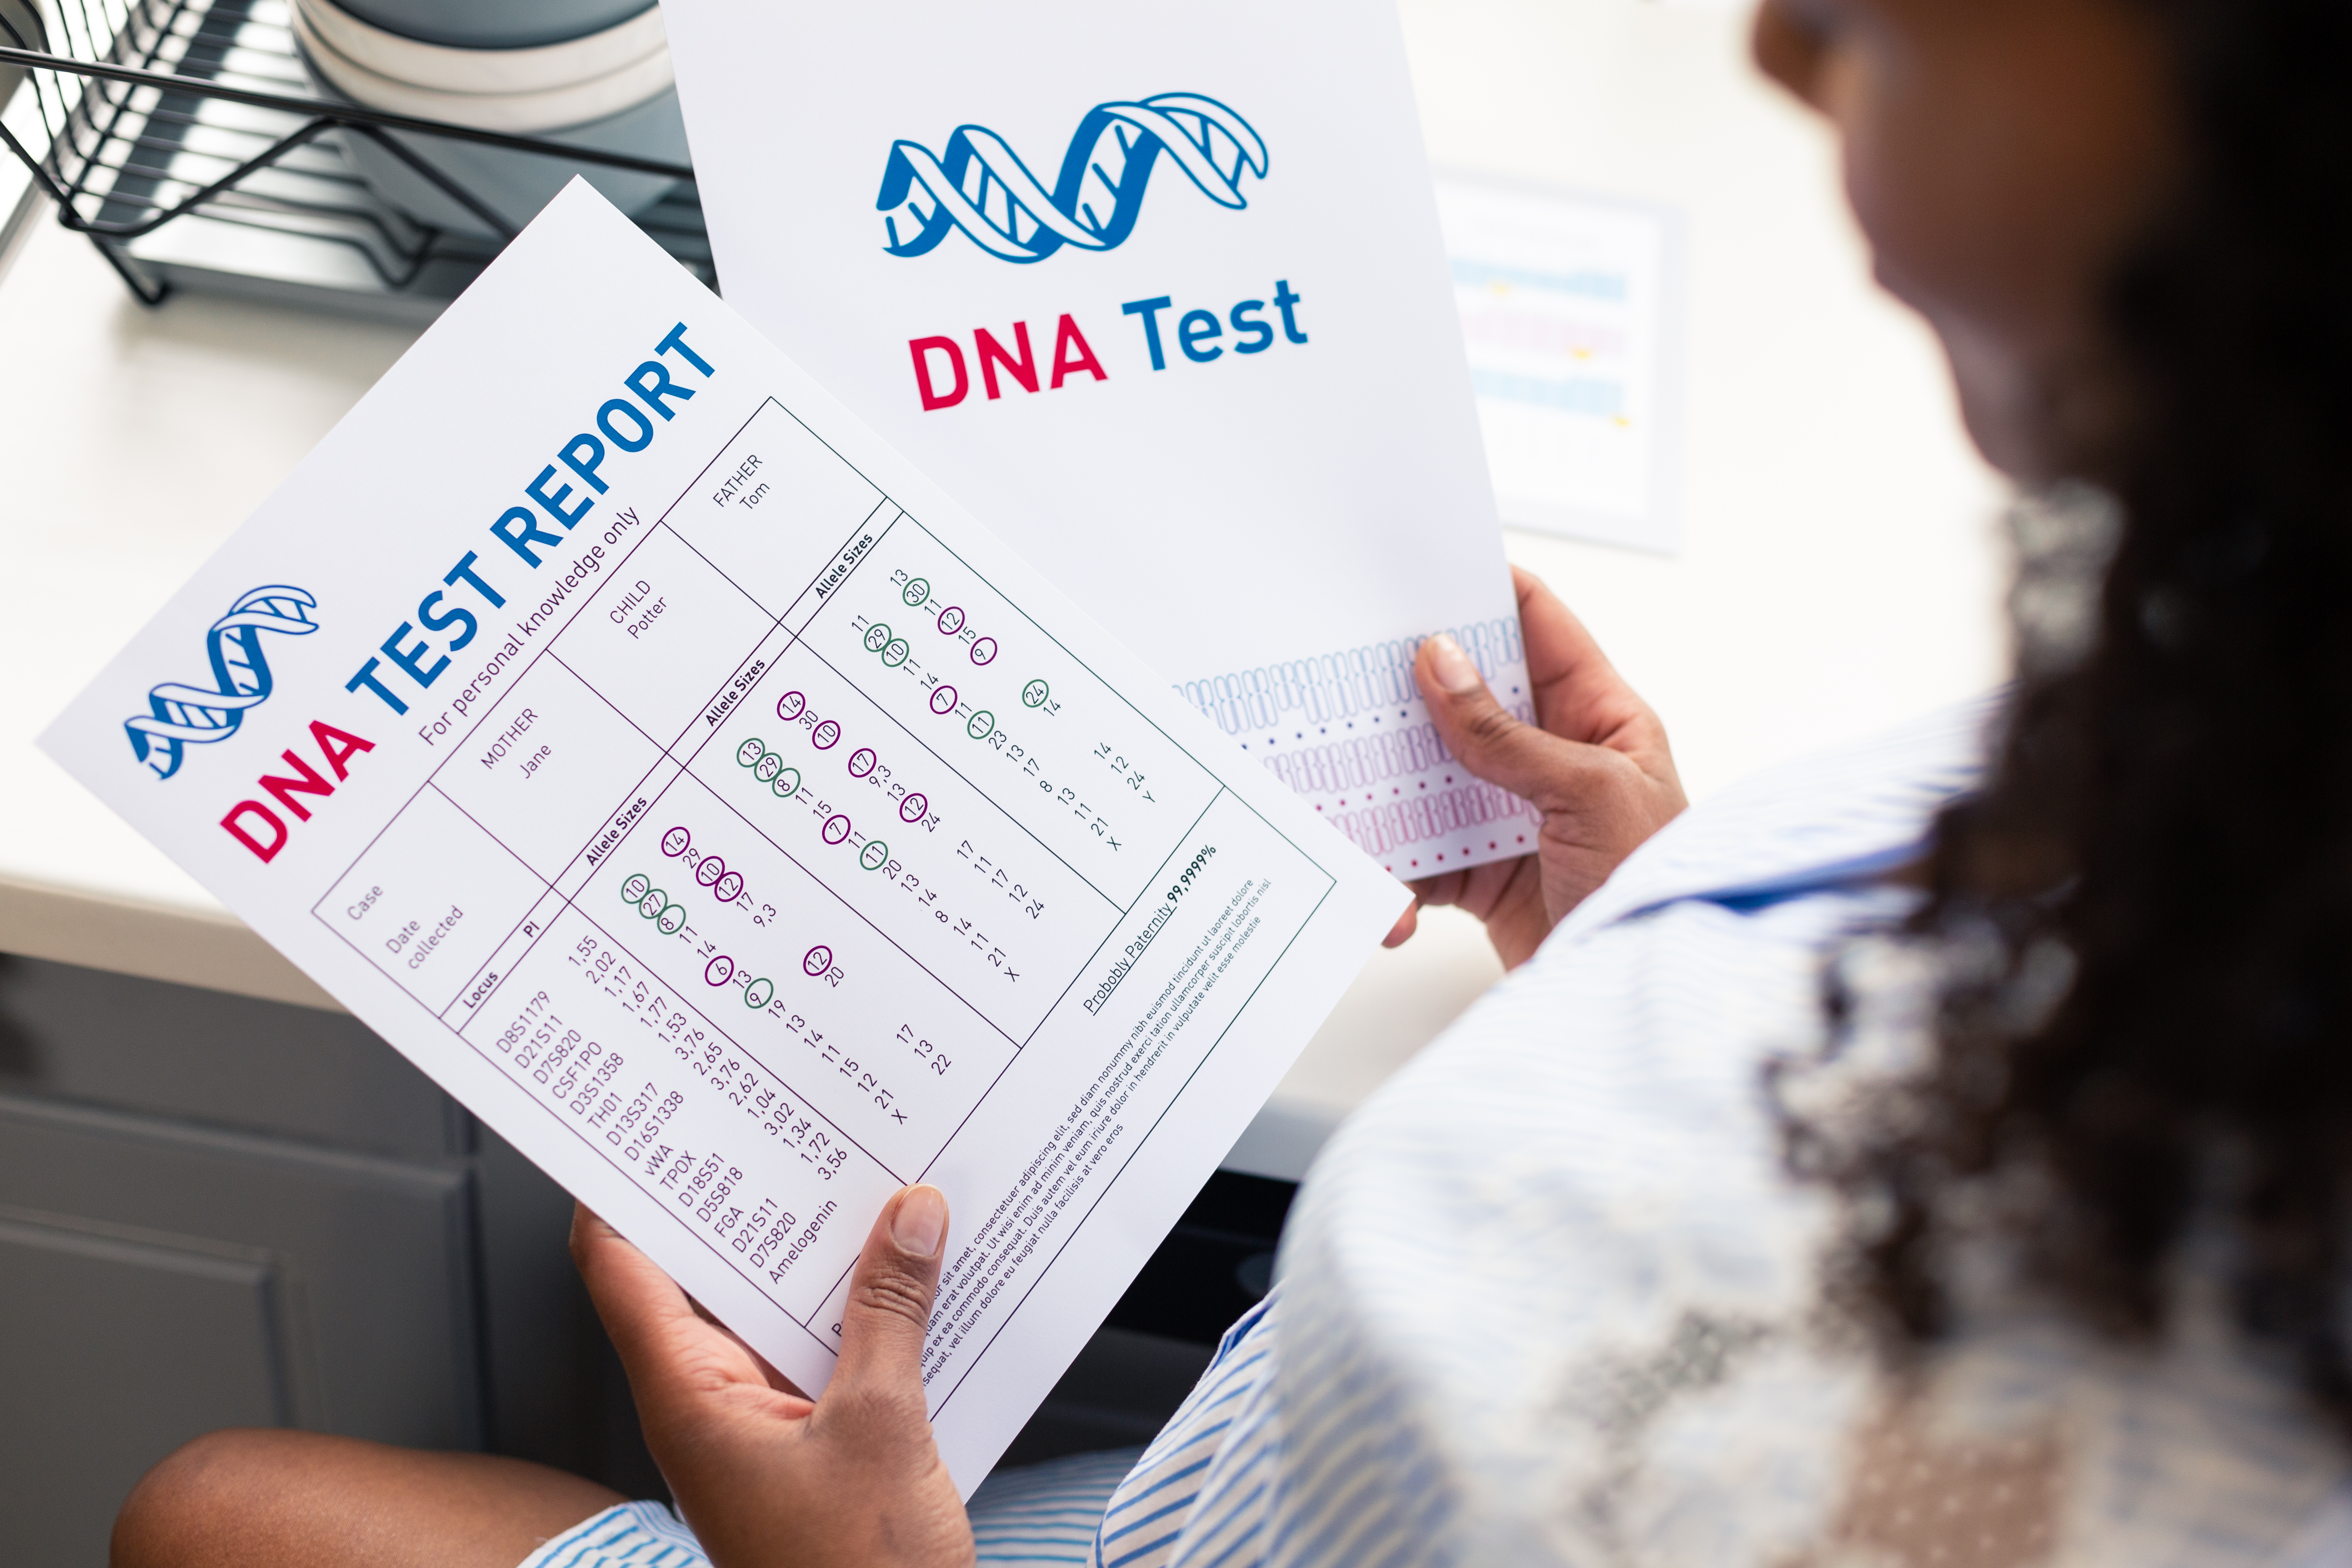 Fresh DNA results. | Source: Shutterstock